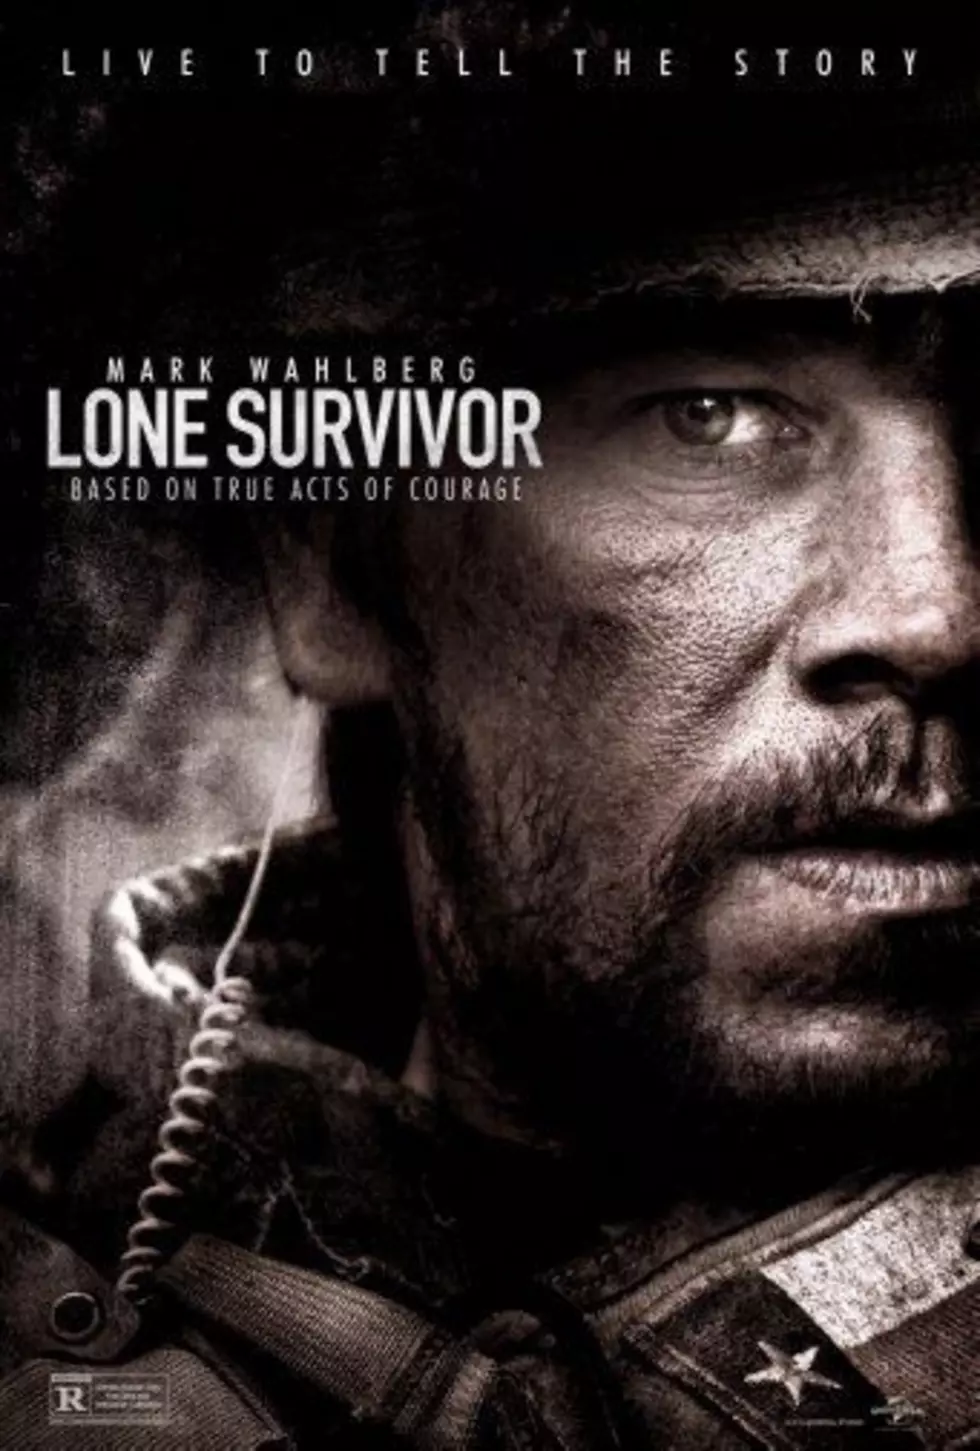 A Big Chuck Movie Review:  “Lone Survivor”